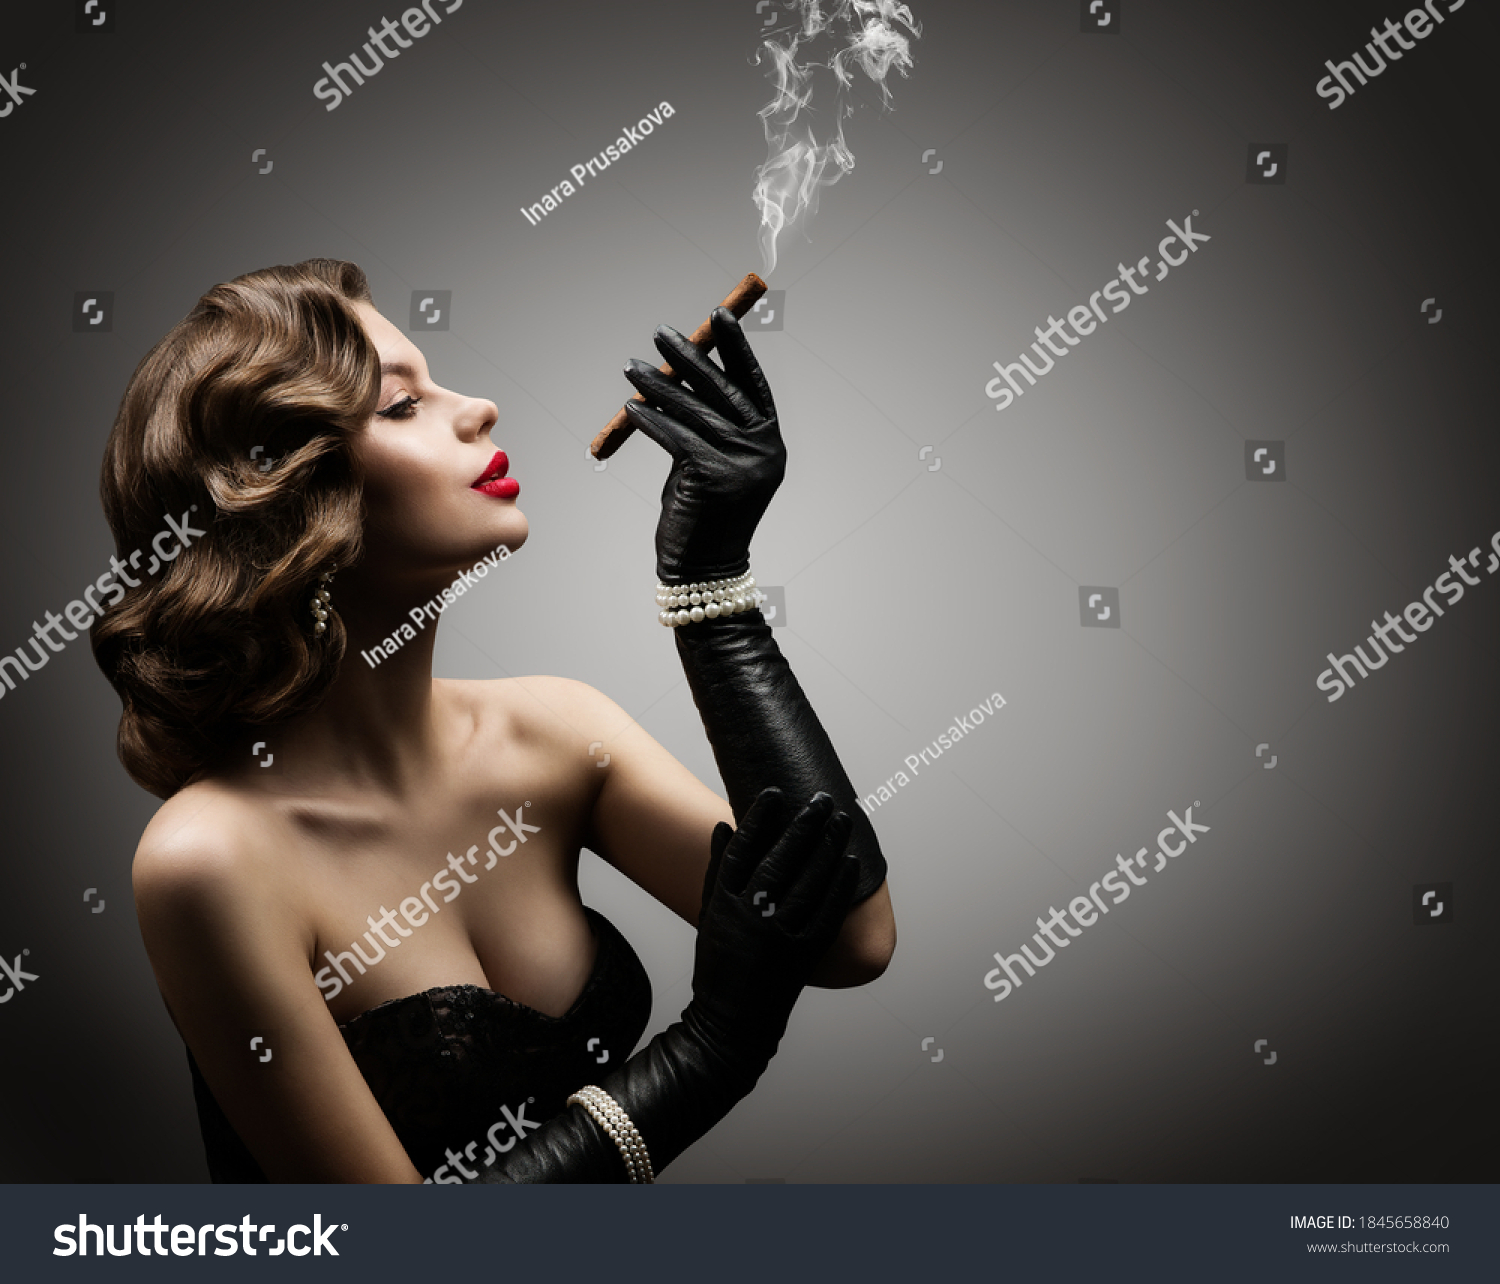 Naked Women Smoking Cigars brothers load